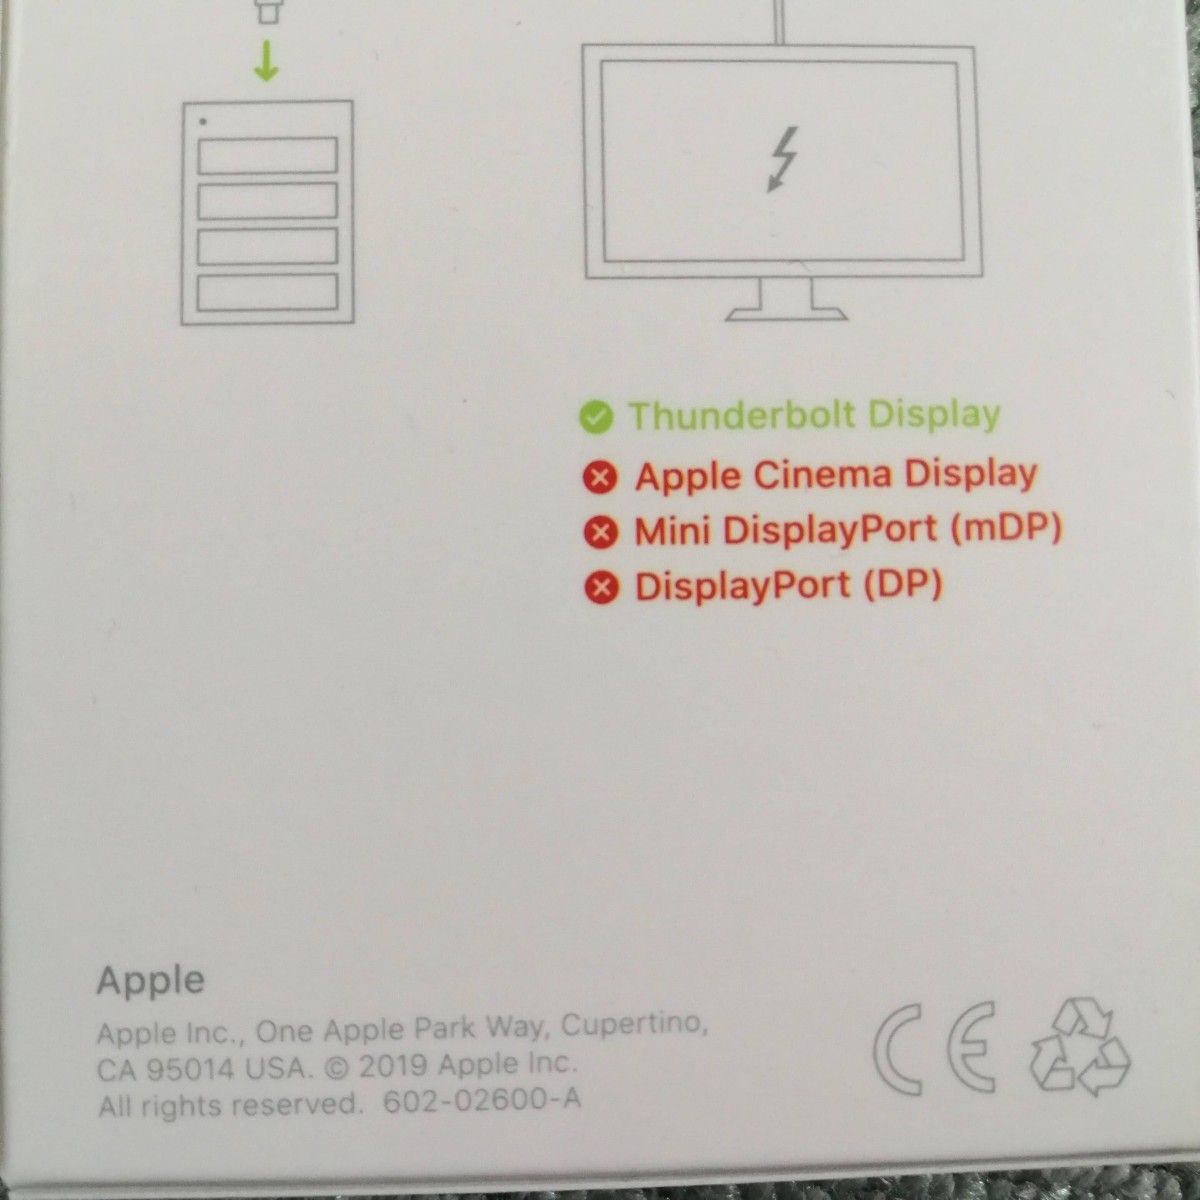 Apple Thunderbolt 3 (USB-C) - Thunderbolt 2アダプタ 未使用品